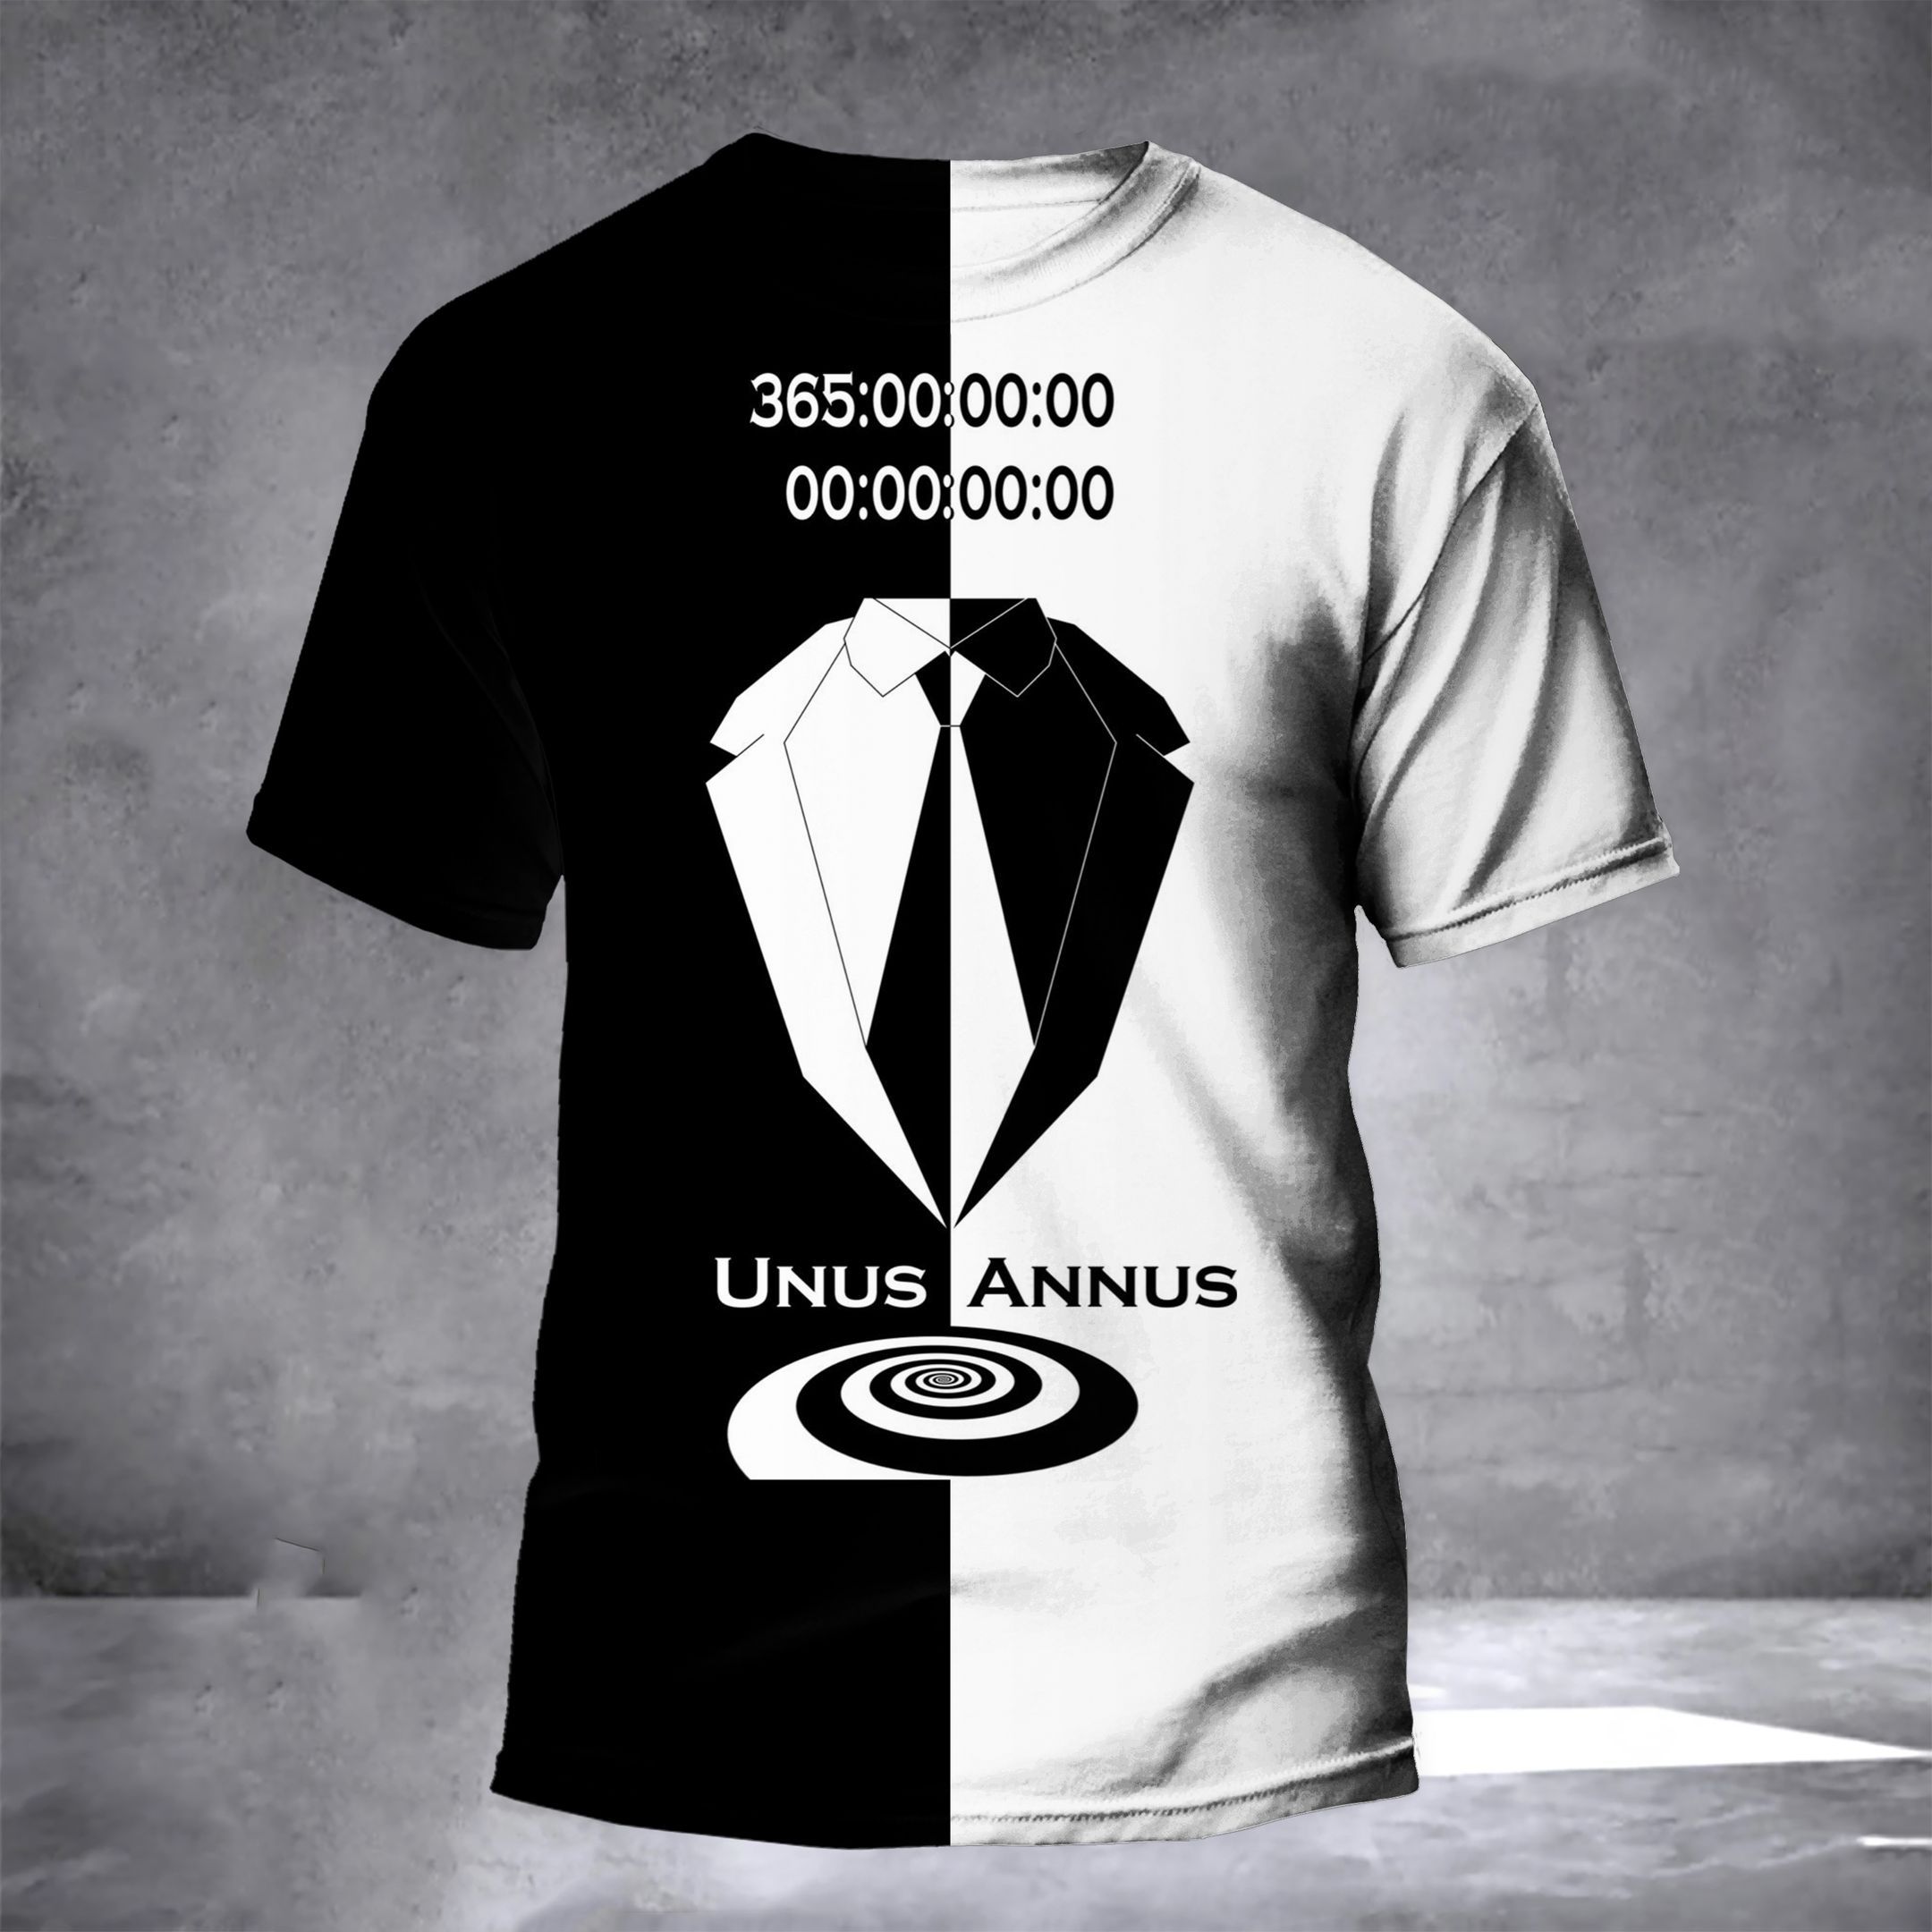 Unus Annus Black And White Vest Shirt Unus Annus The Time T-Shirt Gifts For Brother